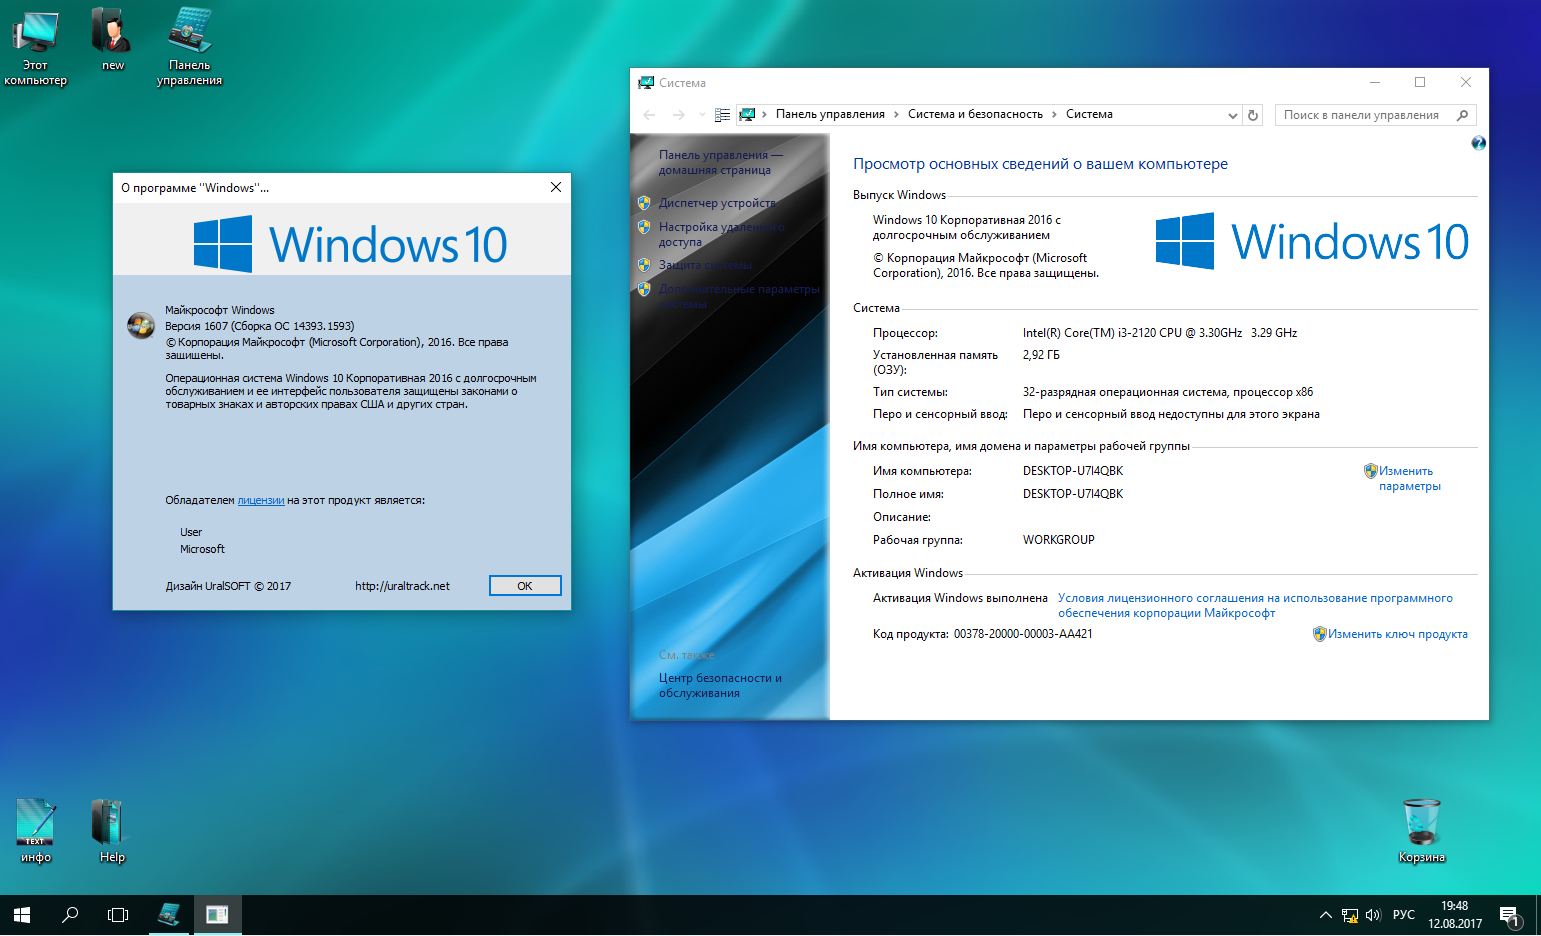 Windows 10 enterprise ключ. Код продукта виндовс. Код Windows 10. Активация виндовс 10 корпоративная. Ключ продукта виндовс 10 корпоративная.